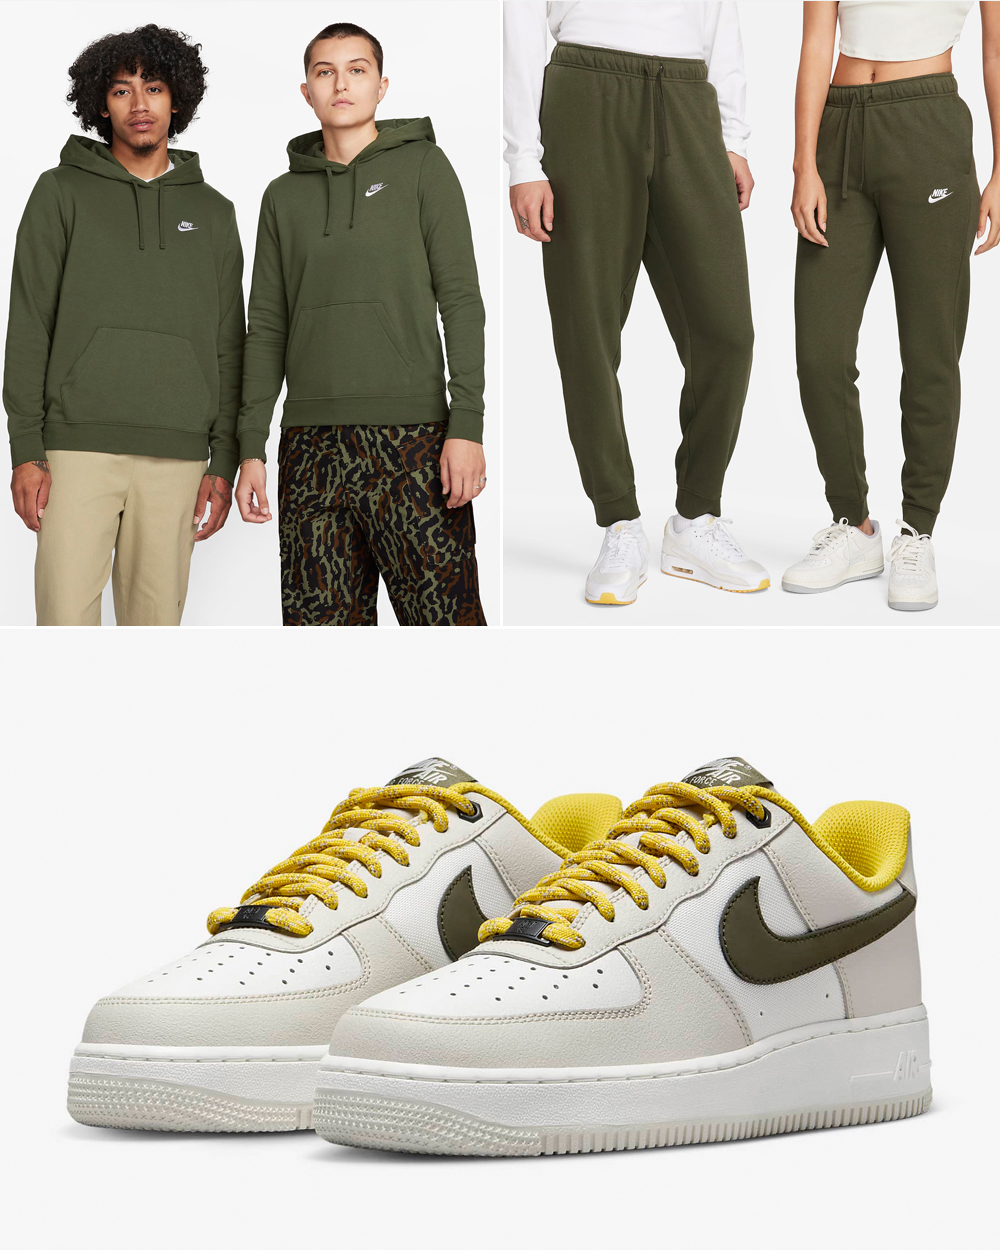 Nike Air Force 1 07 Low Light Bone Cargo Khaki Outfits 2